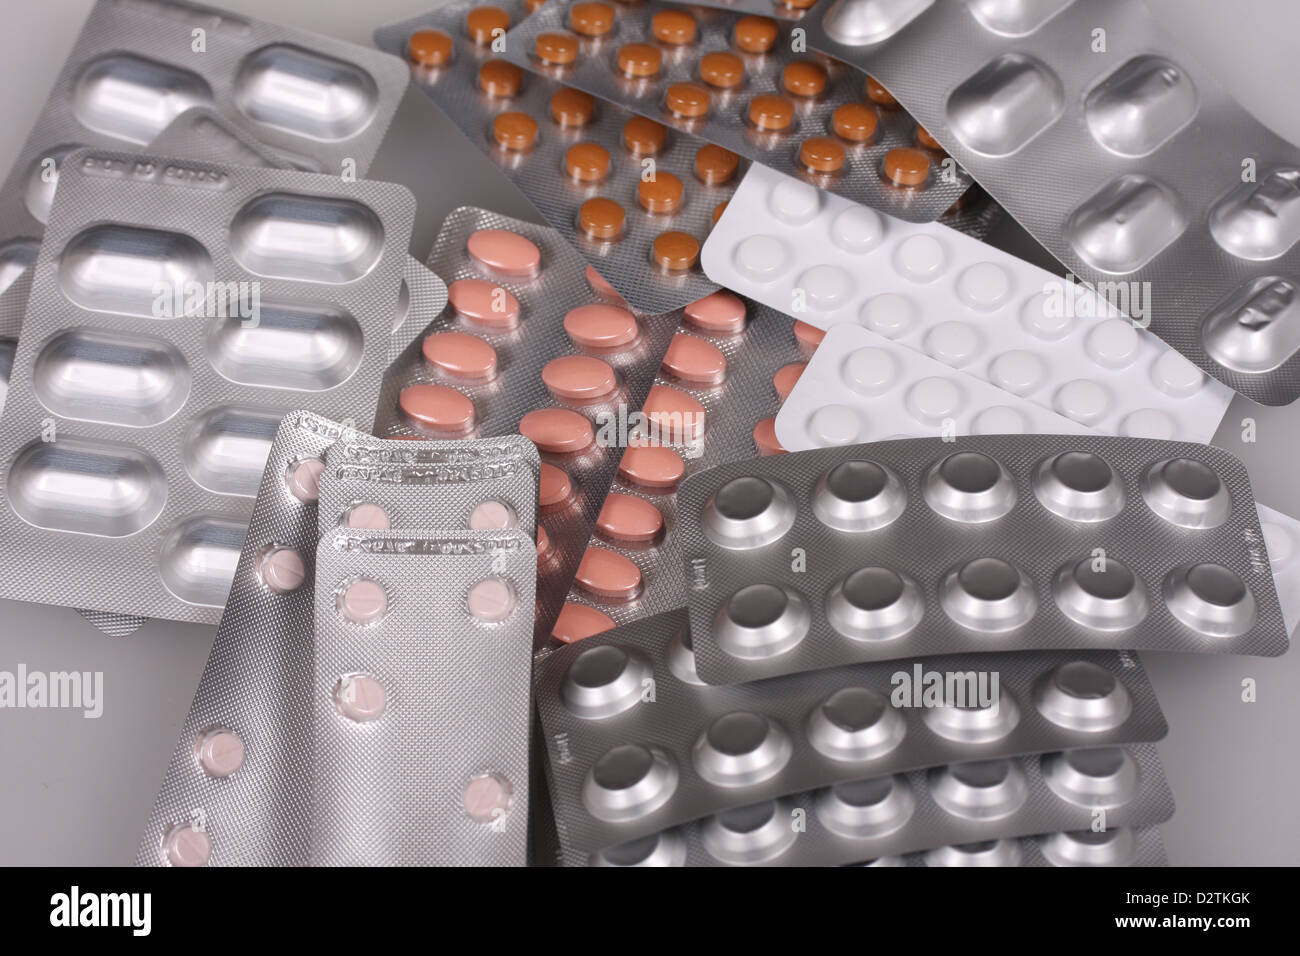 Pharmaceuticals illustration showing oral prescription drugs in blister packs. 28 January 2013. Stock Photo